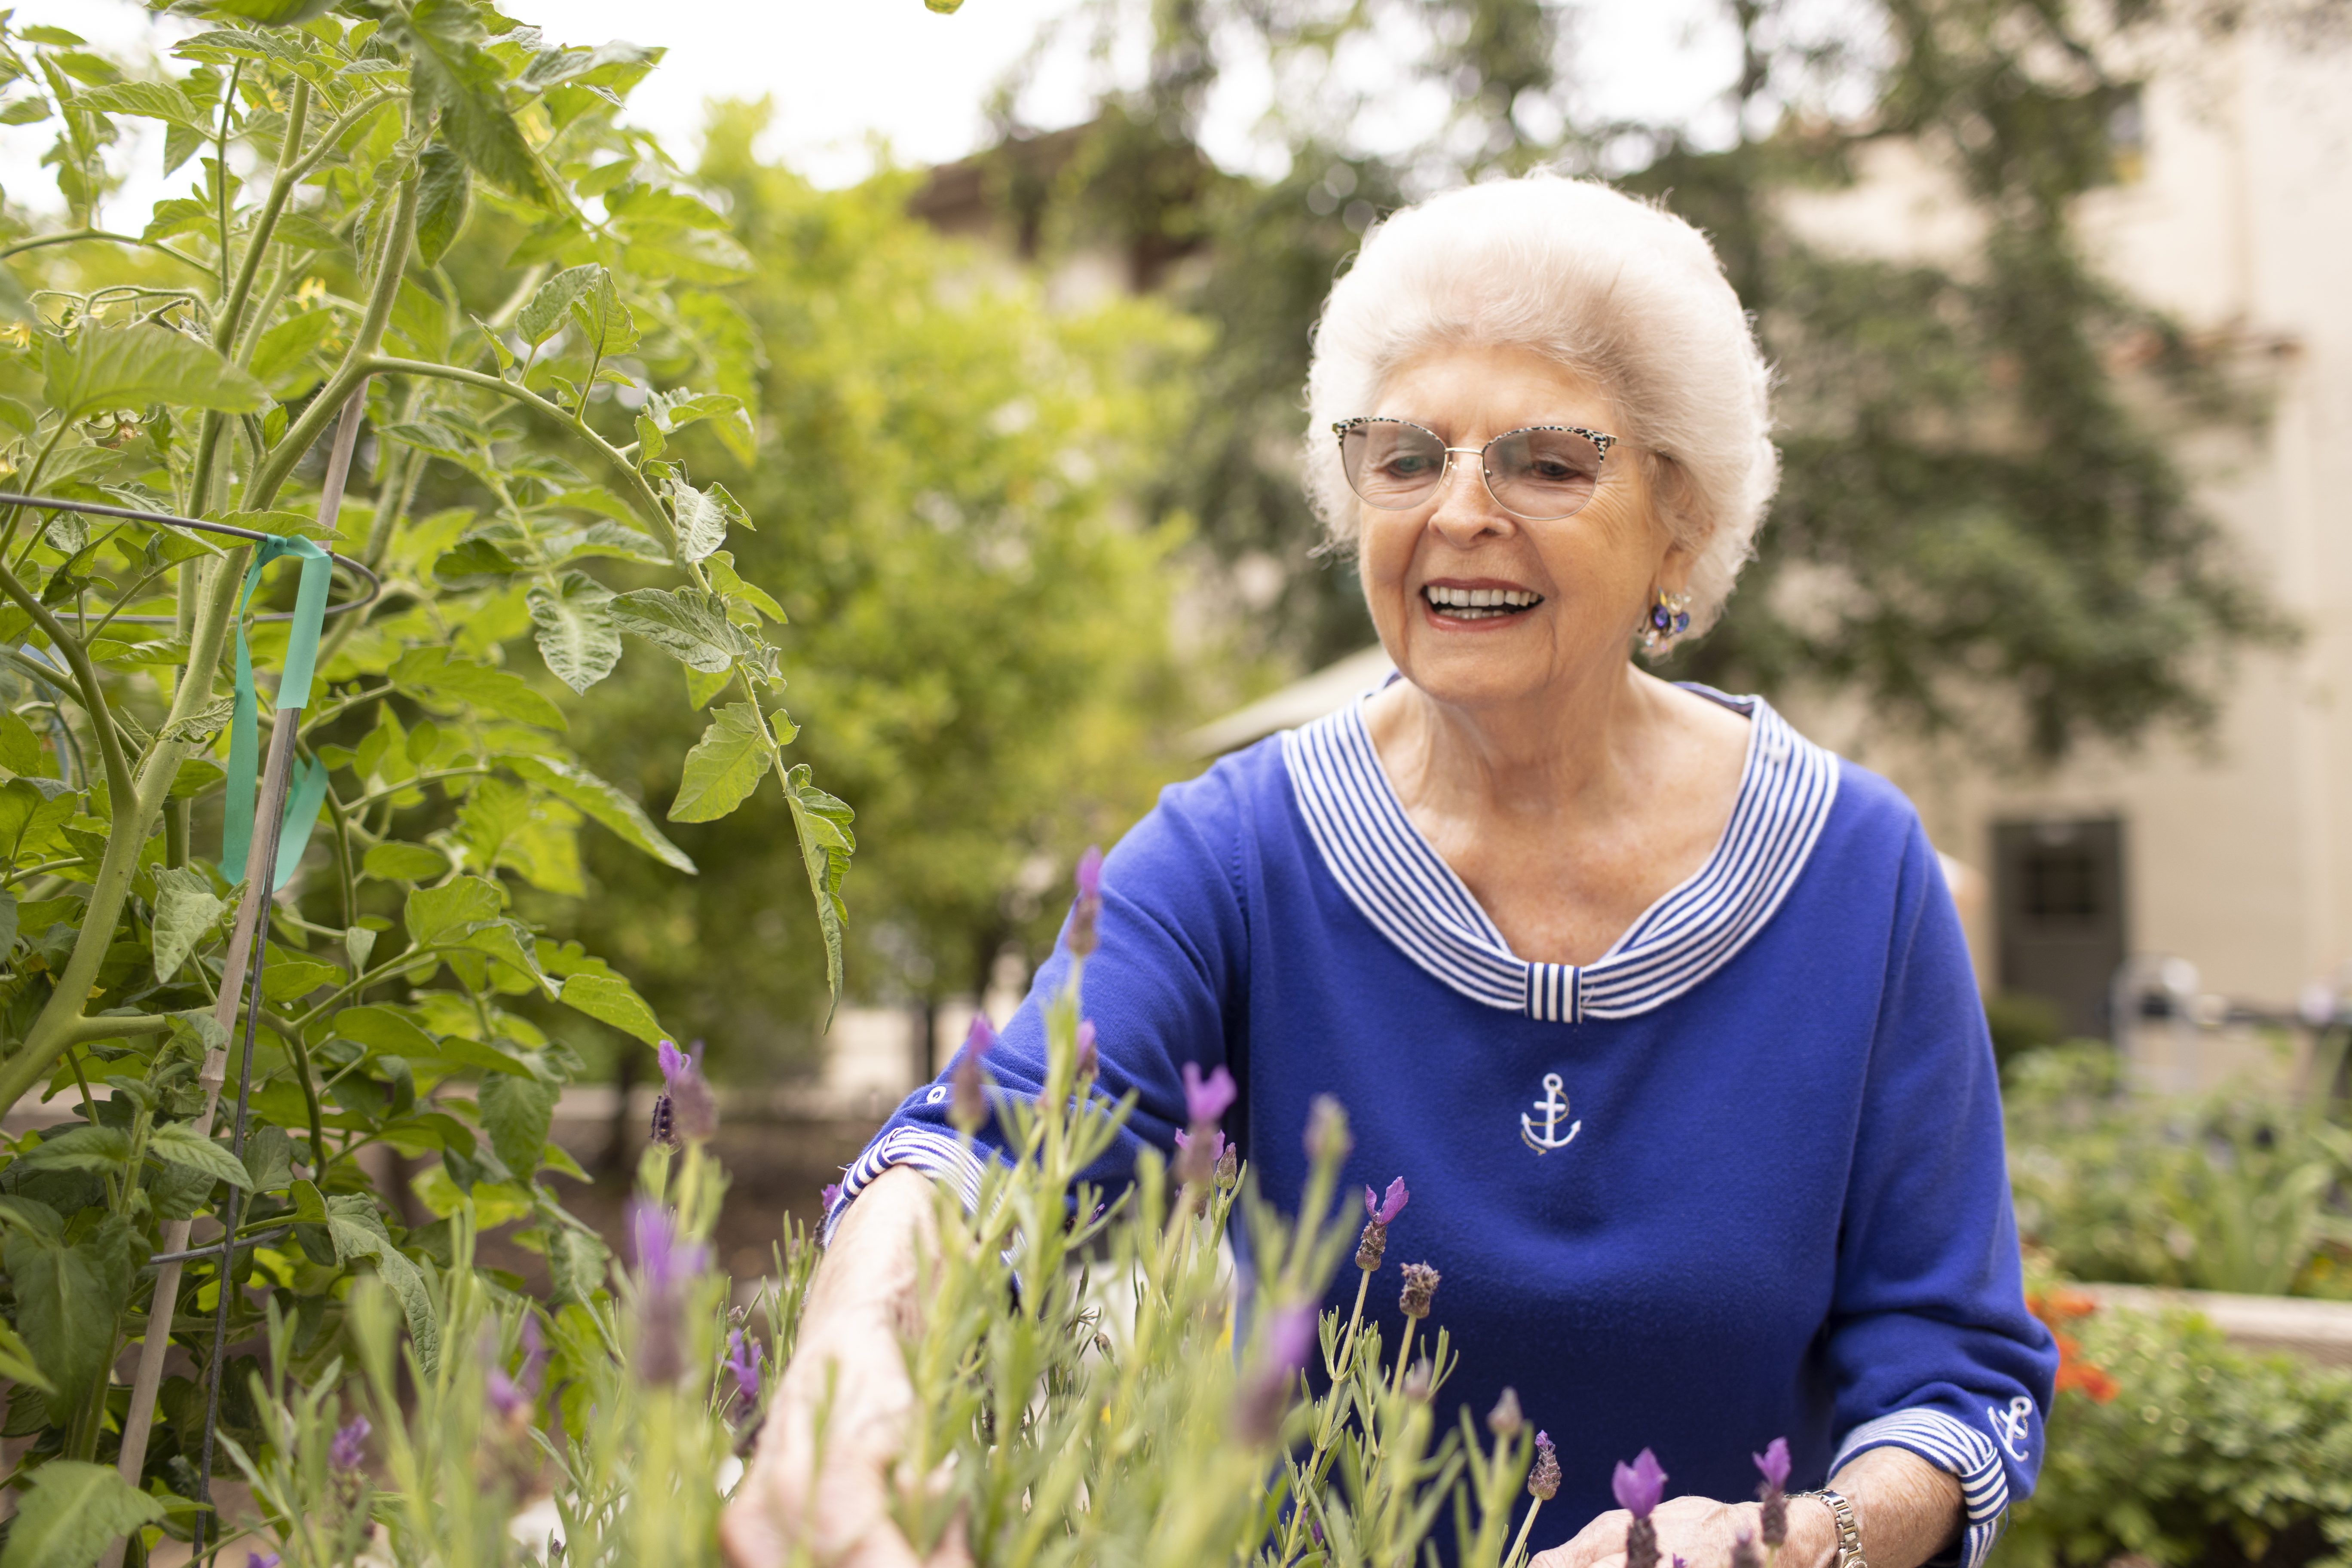 an elderly woman gardening while wearing a vibrant blue dress